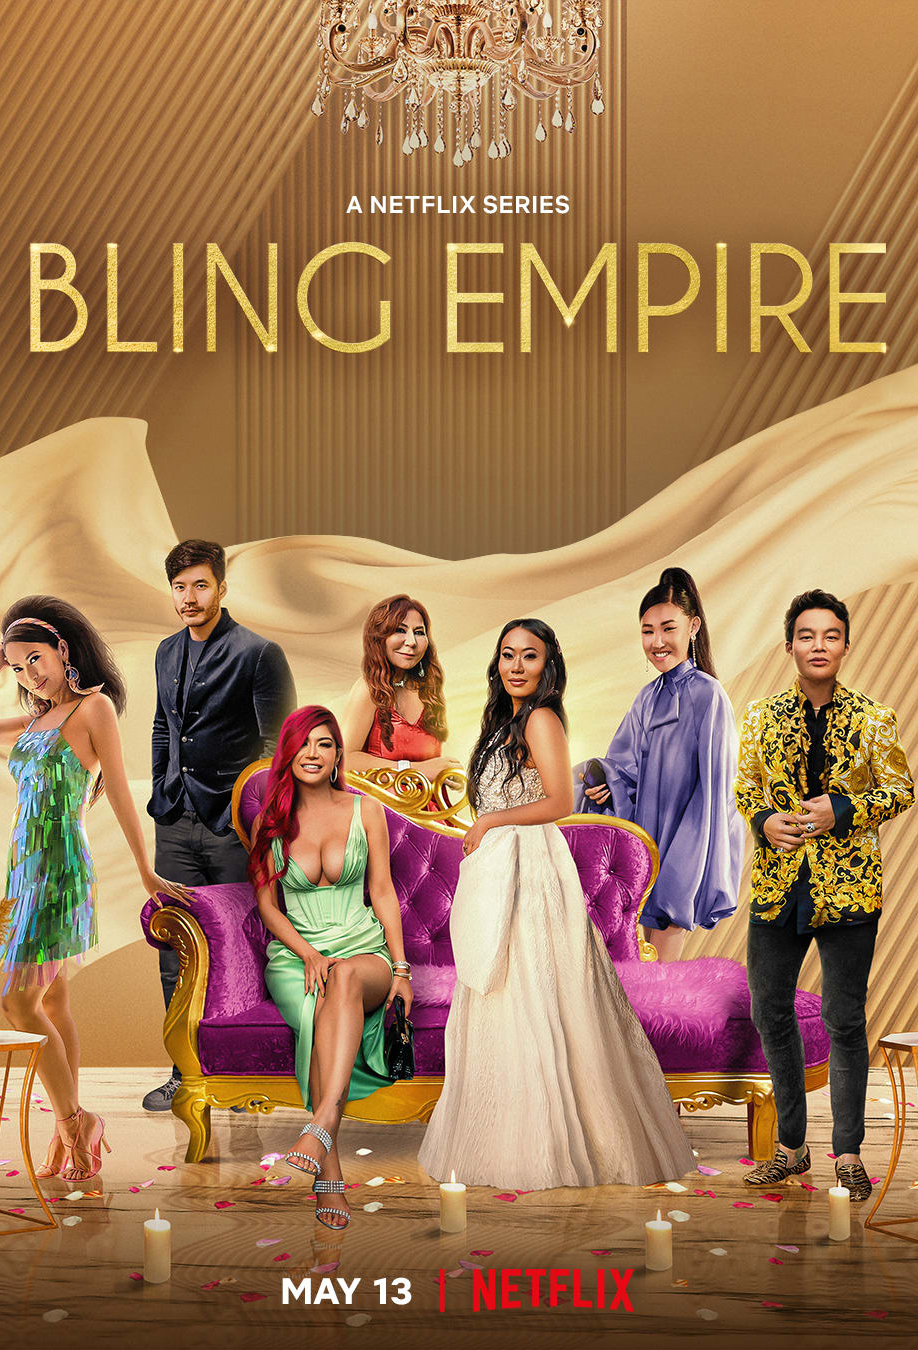 Sneak Peek for Netflix's "Bling Empire" season 3